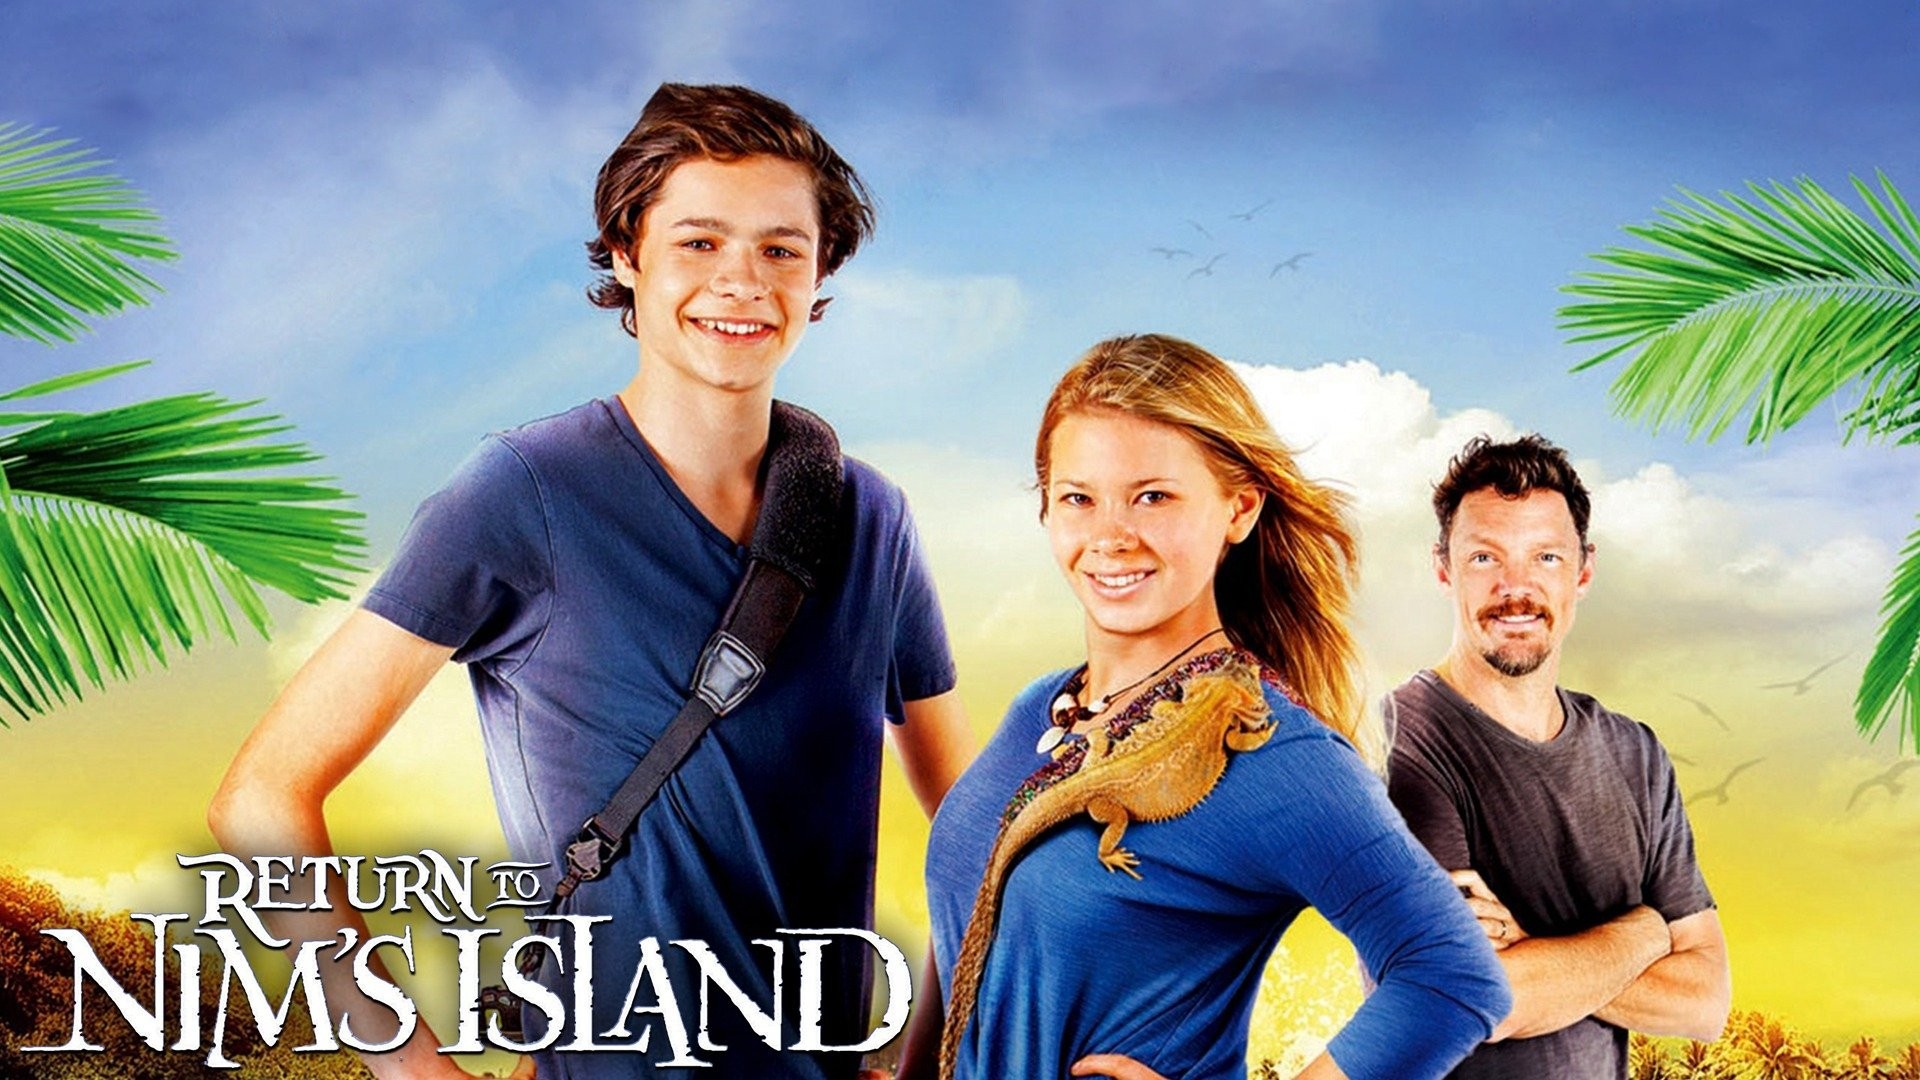 Assistir 'Return to Nim's Island' online - ver filme completo